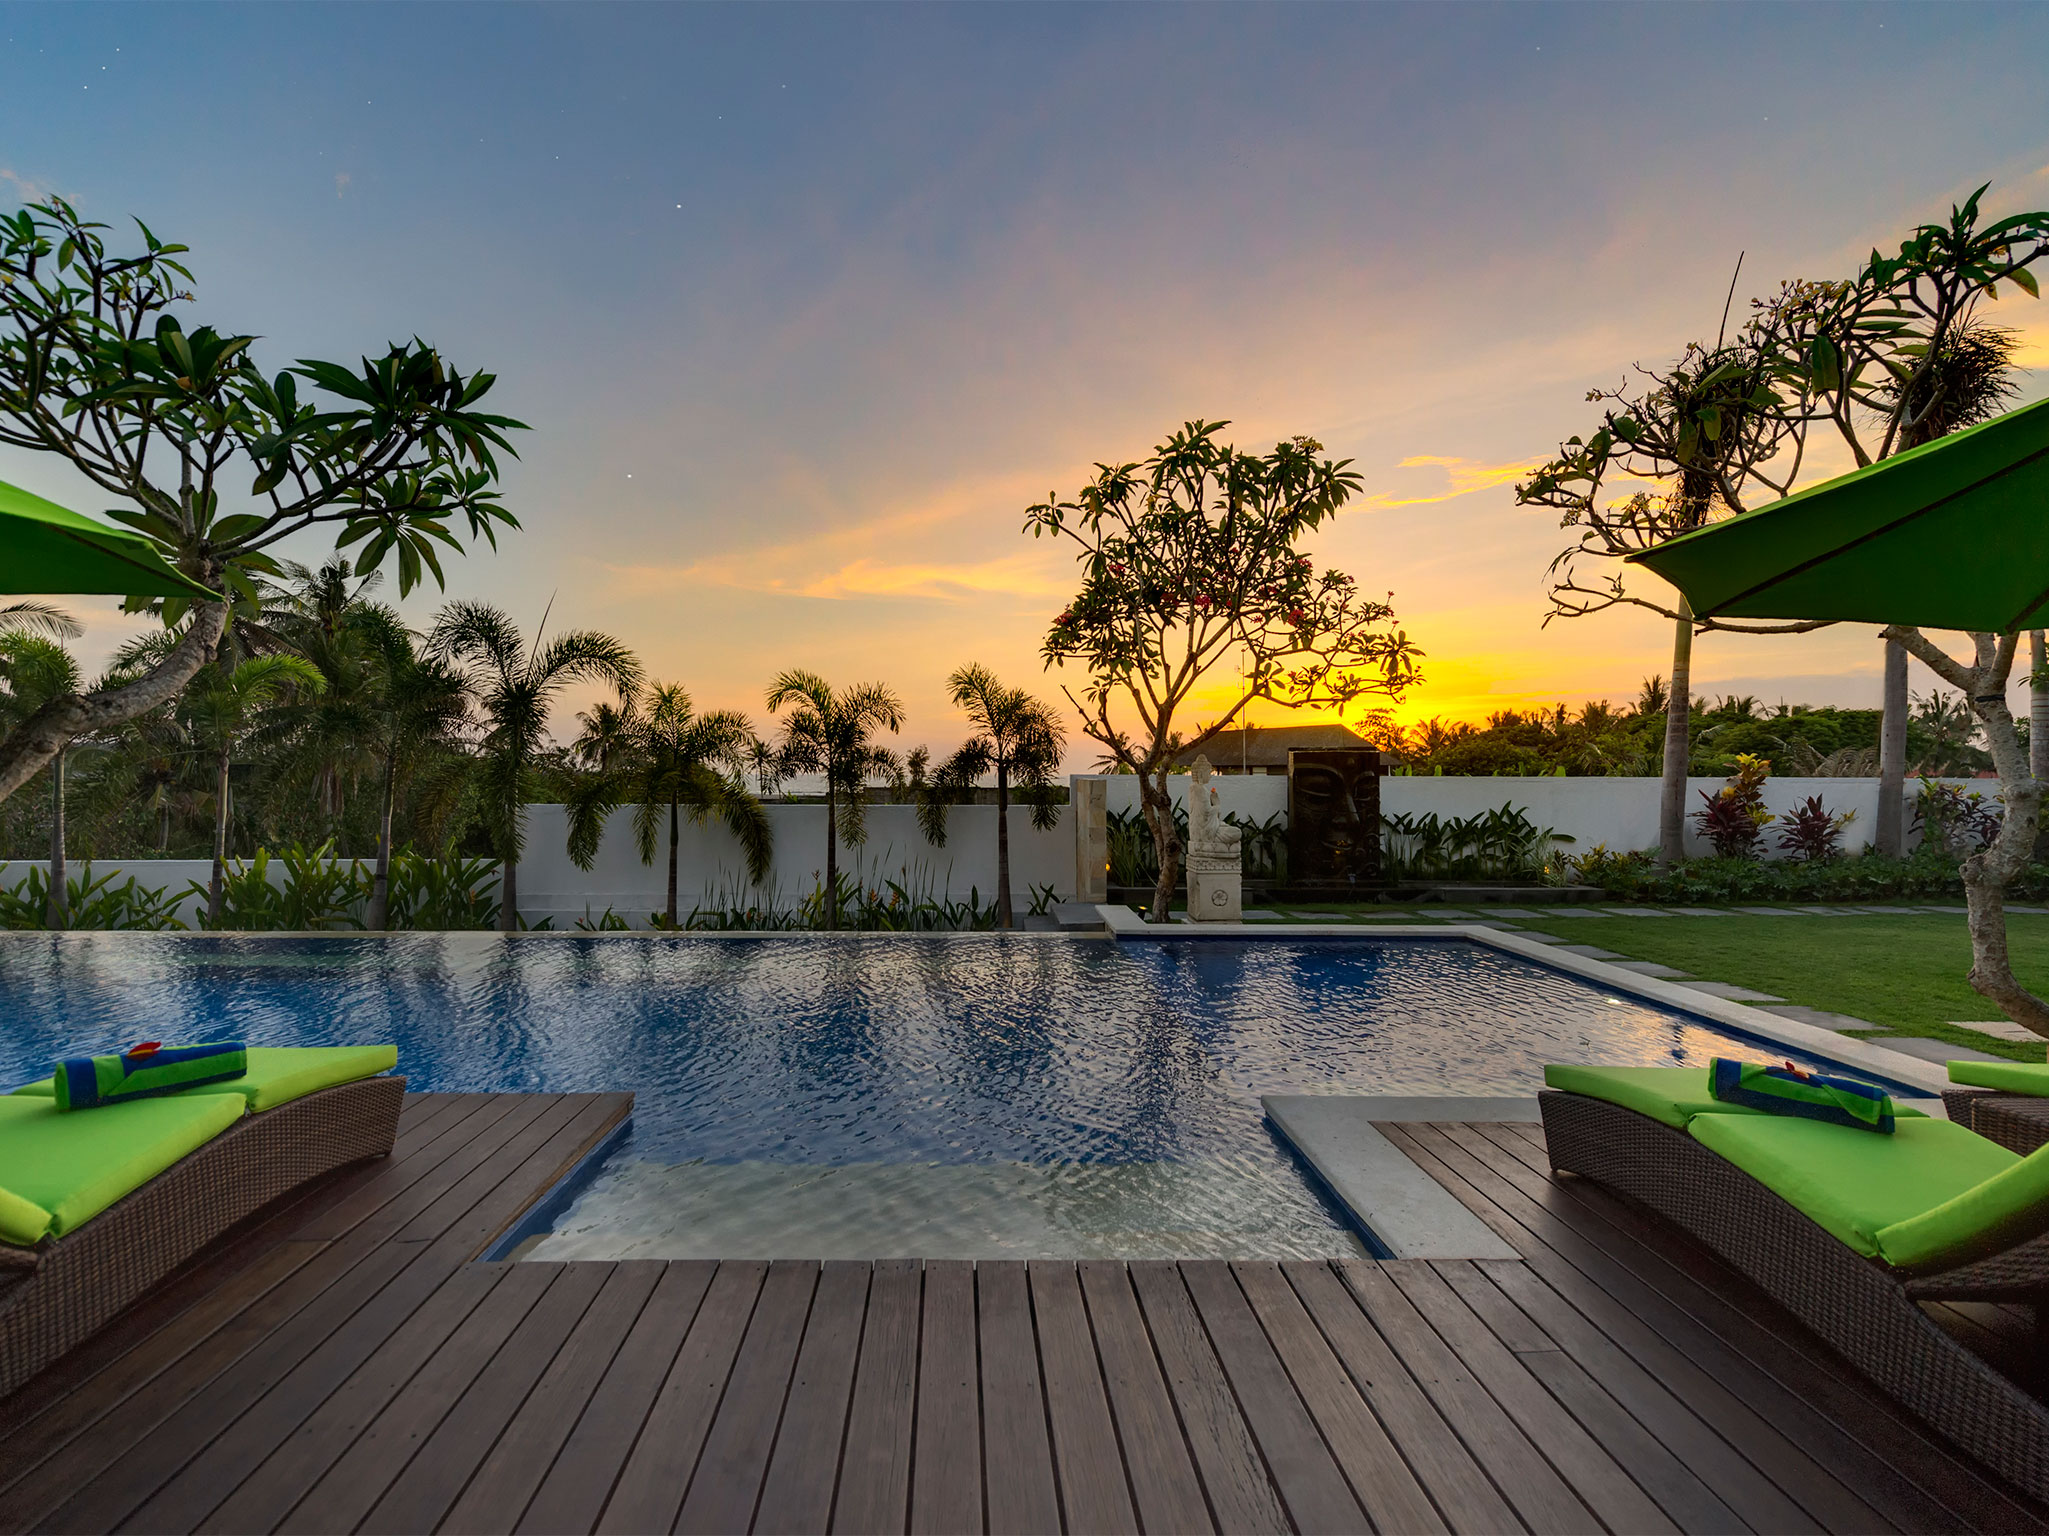 Villa Luwih - Sunset over the pool - Villa Luwih, Canggu, Bali